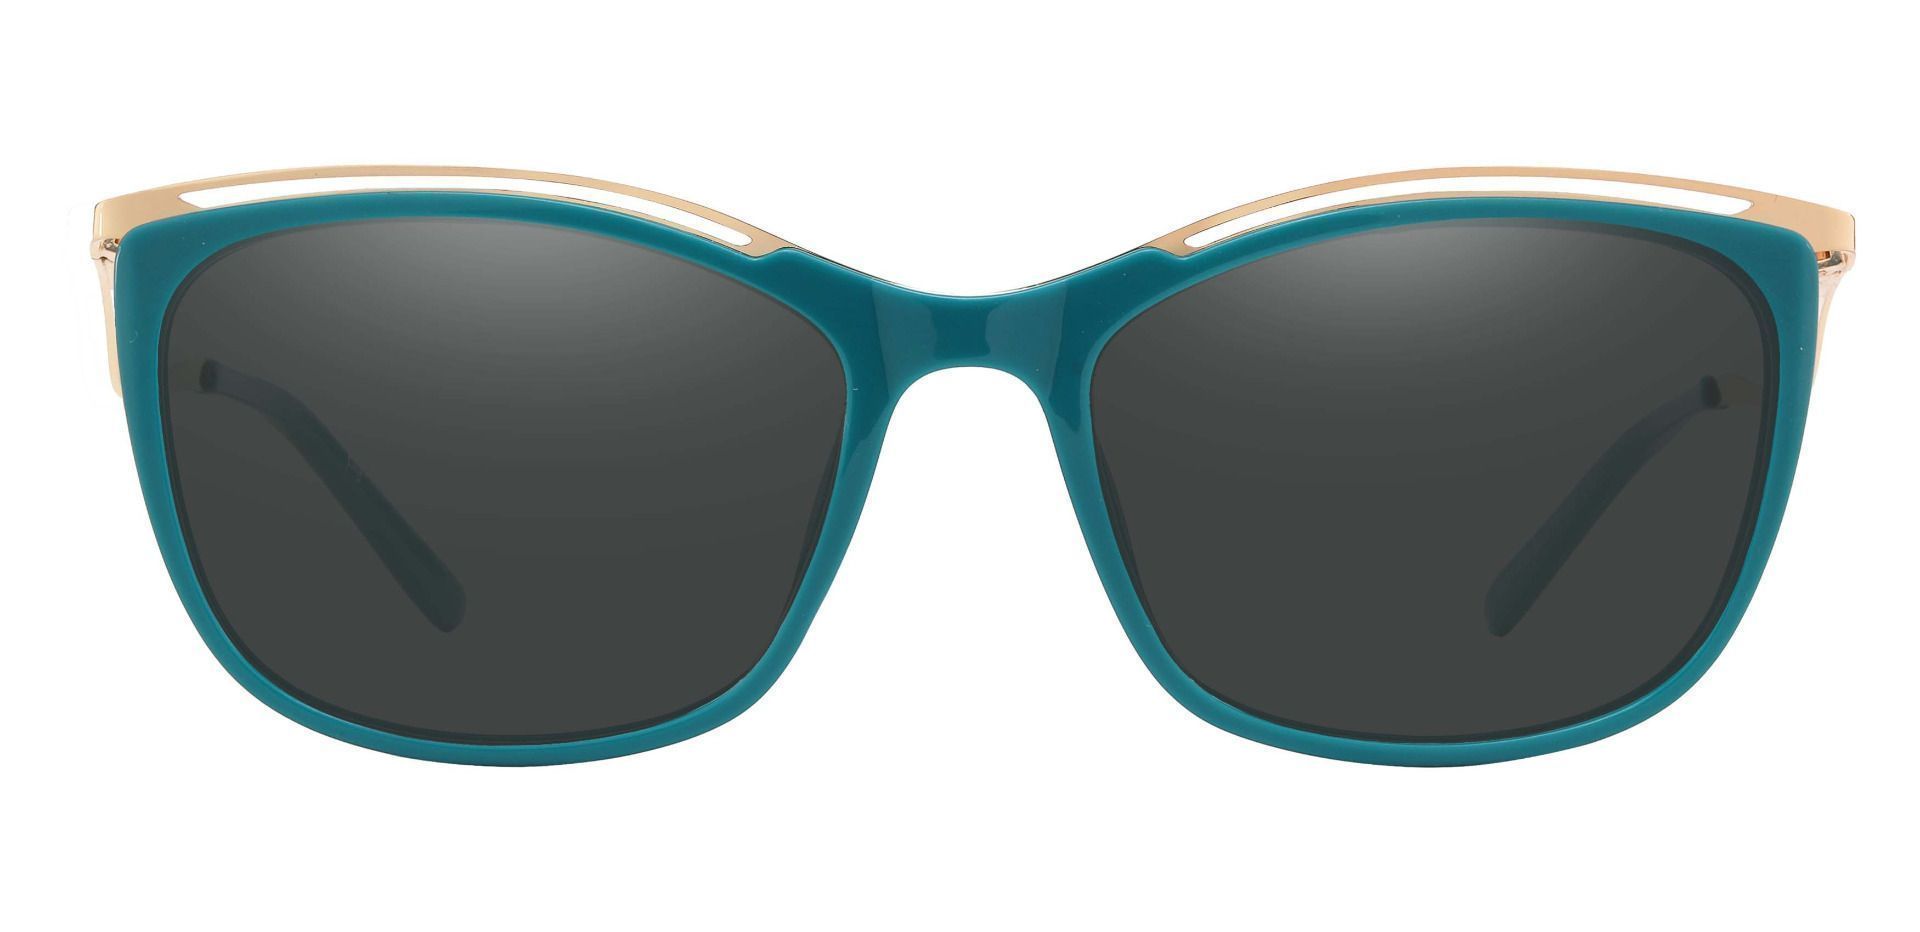 Enola Cat Eye Reading Sunglasses - Green Frame With Gray Lenses